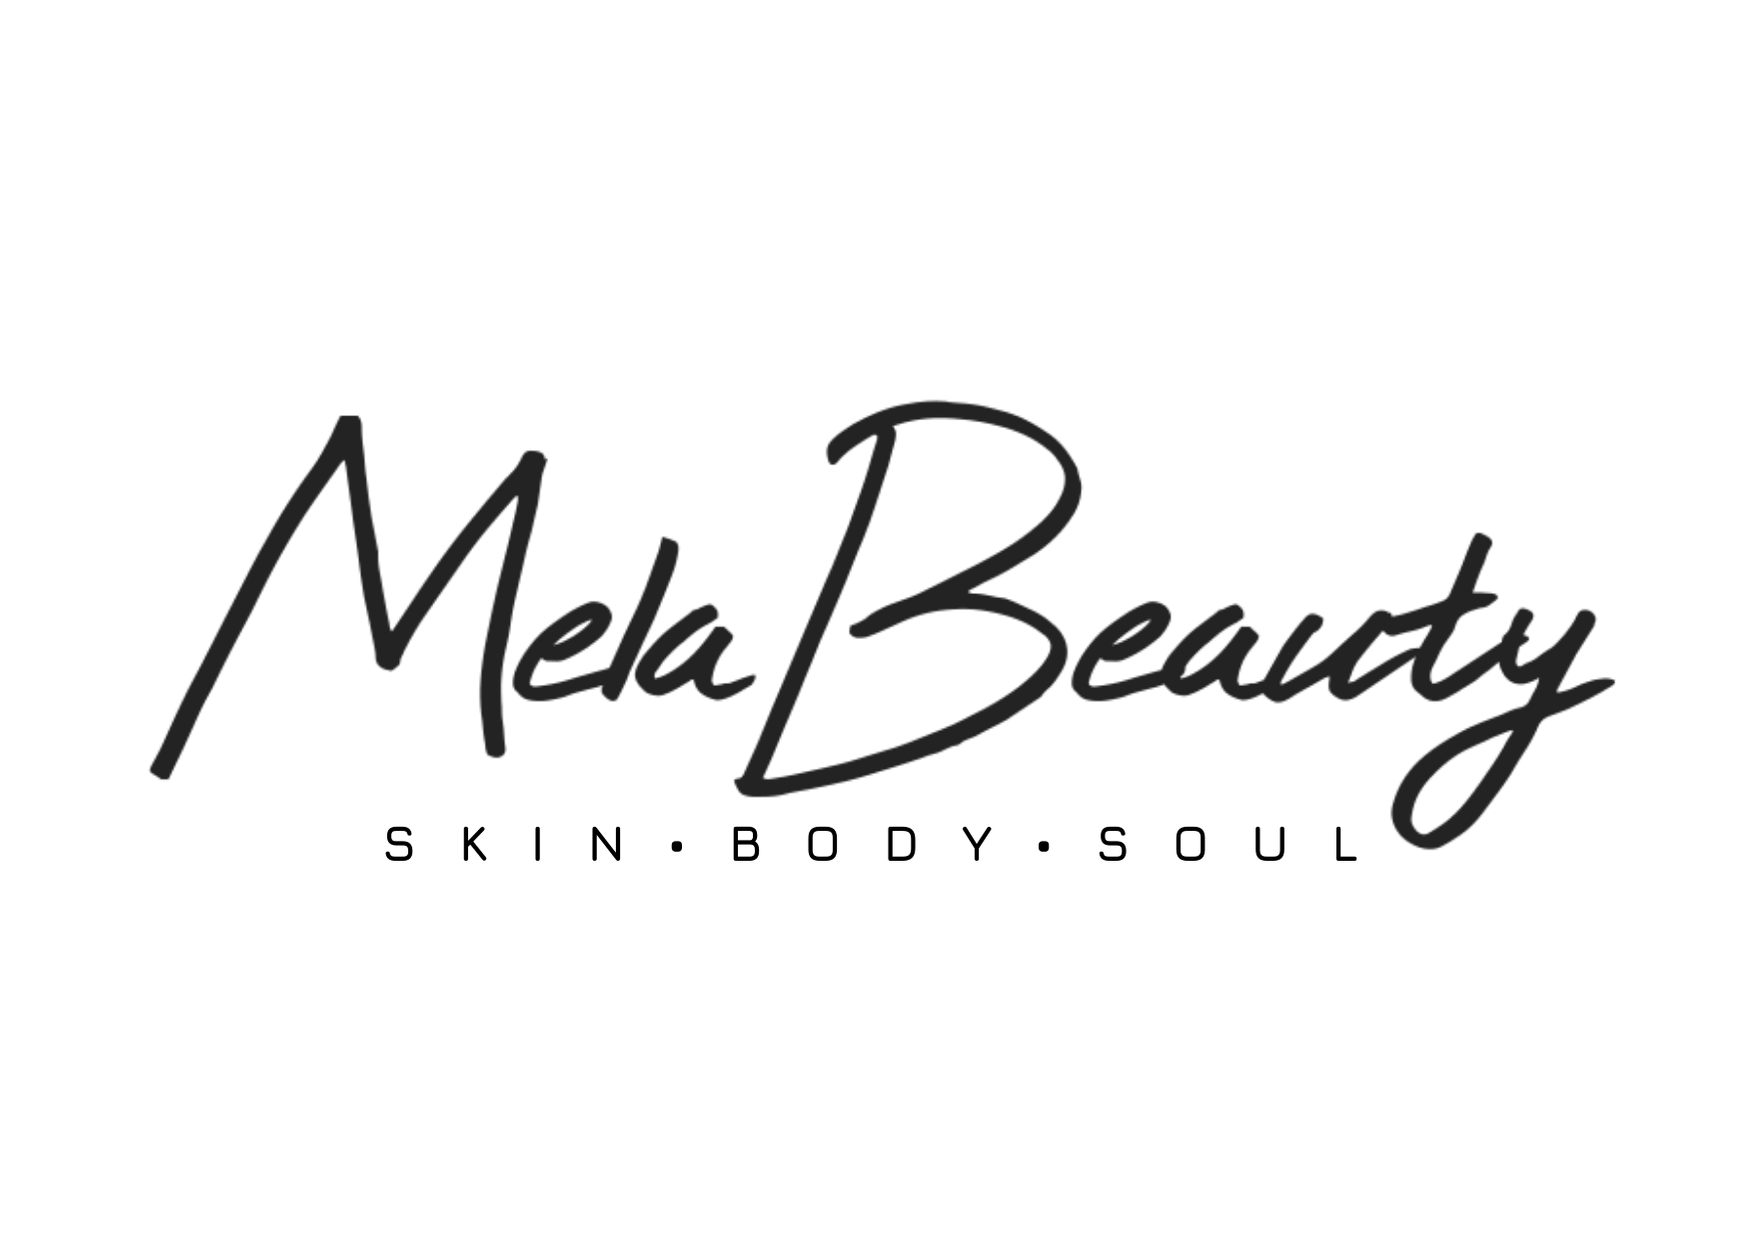 462-logo-and-strap-white-1-mela-beauty.png